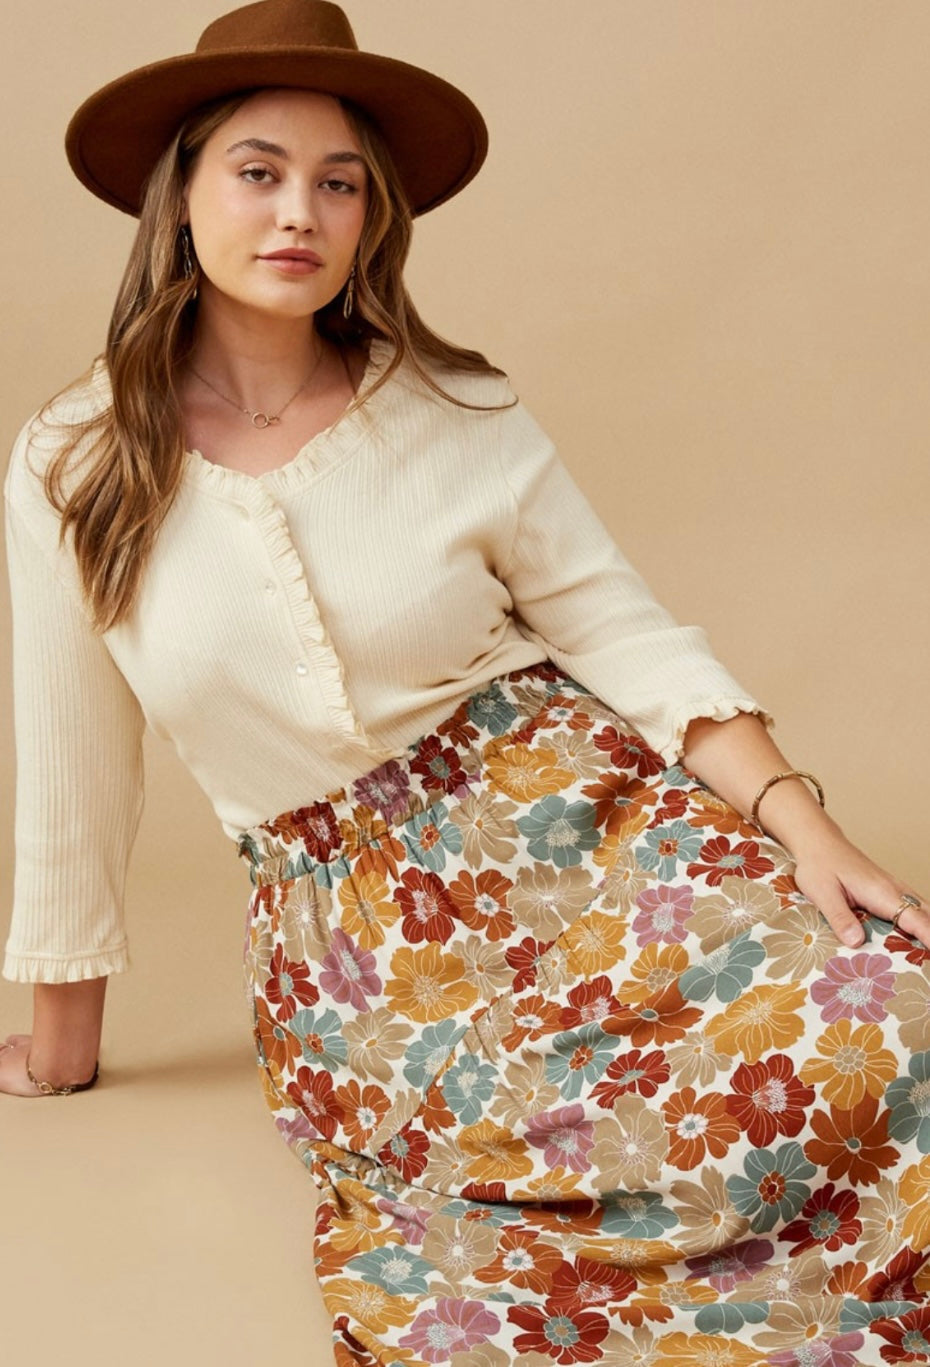 Wren Floral Skirt